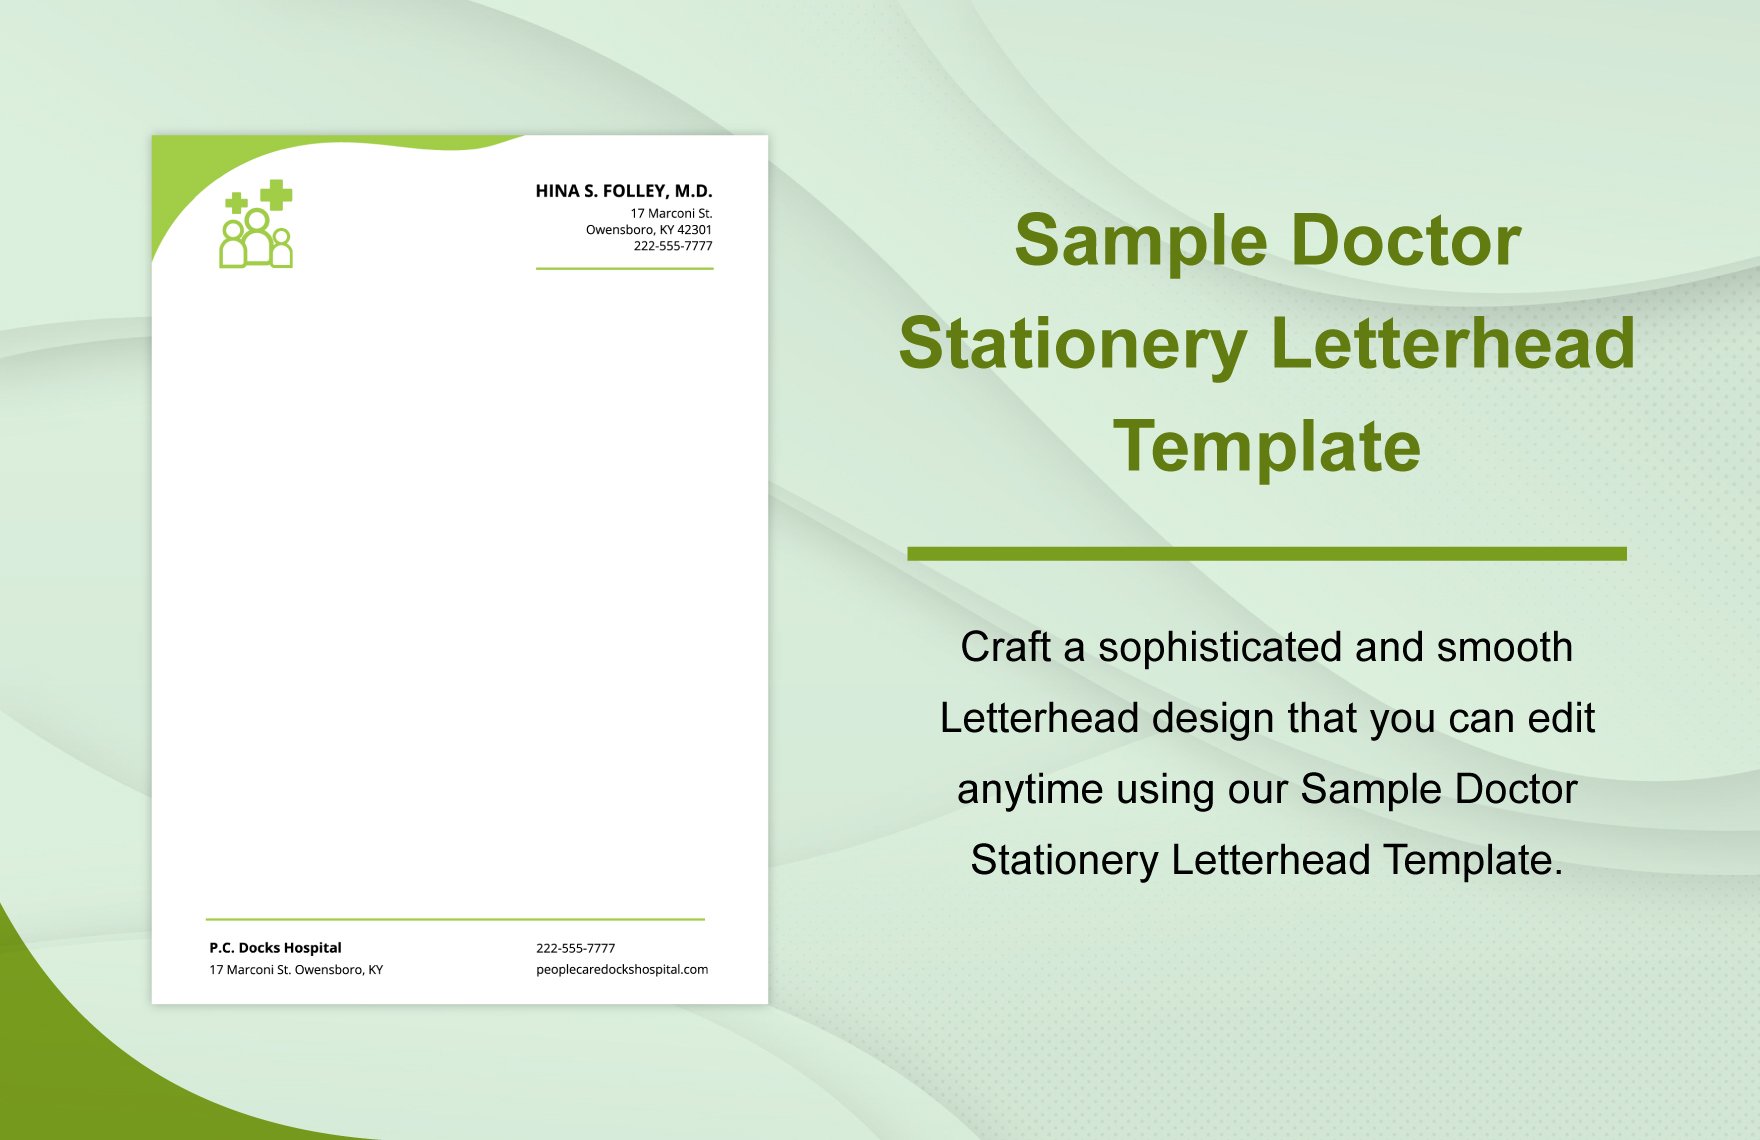 Sample Doctor Stationery Letterhead Template